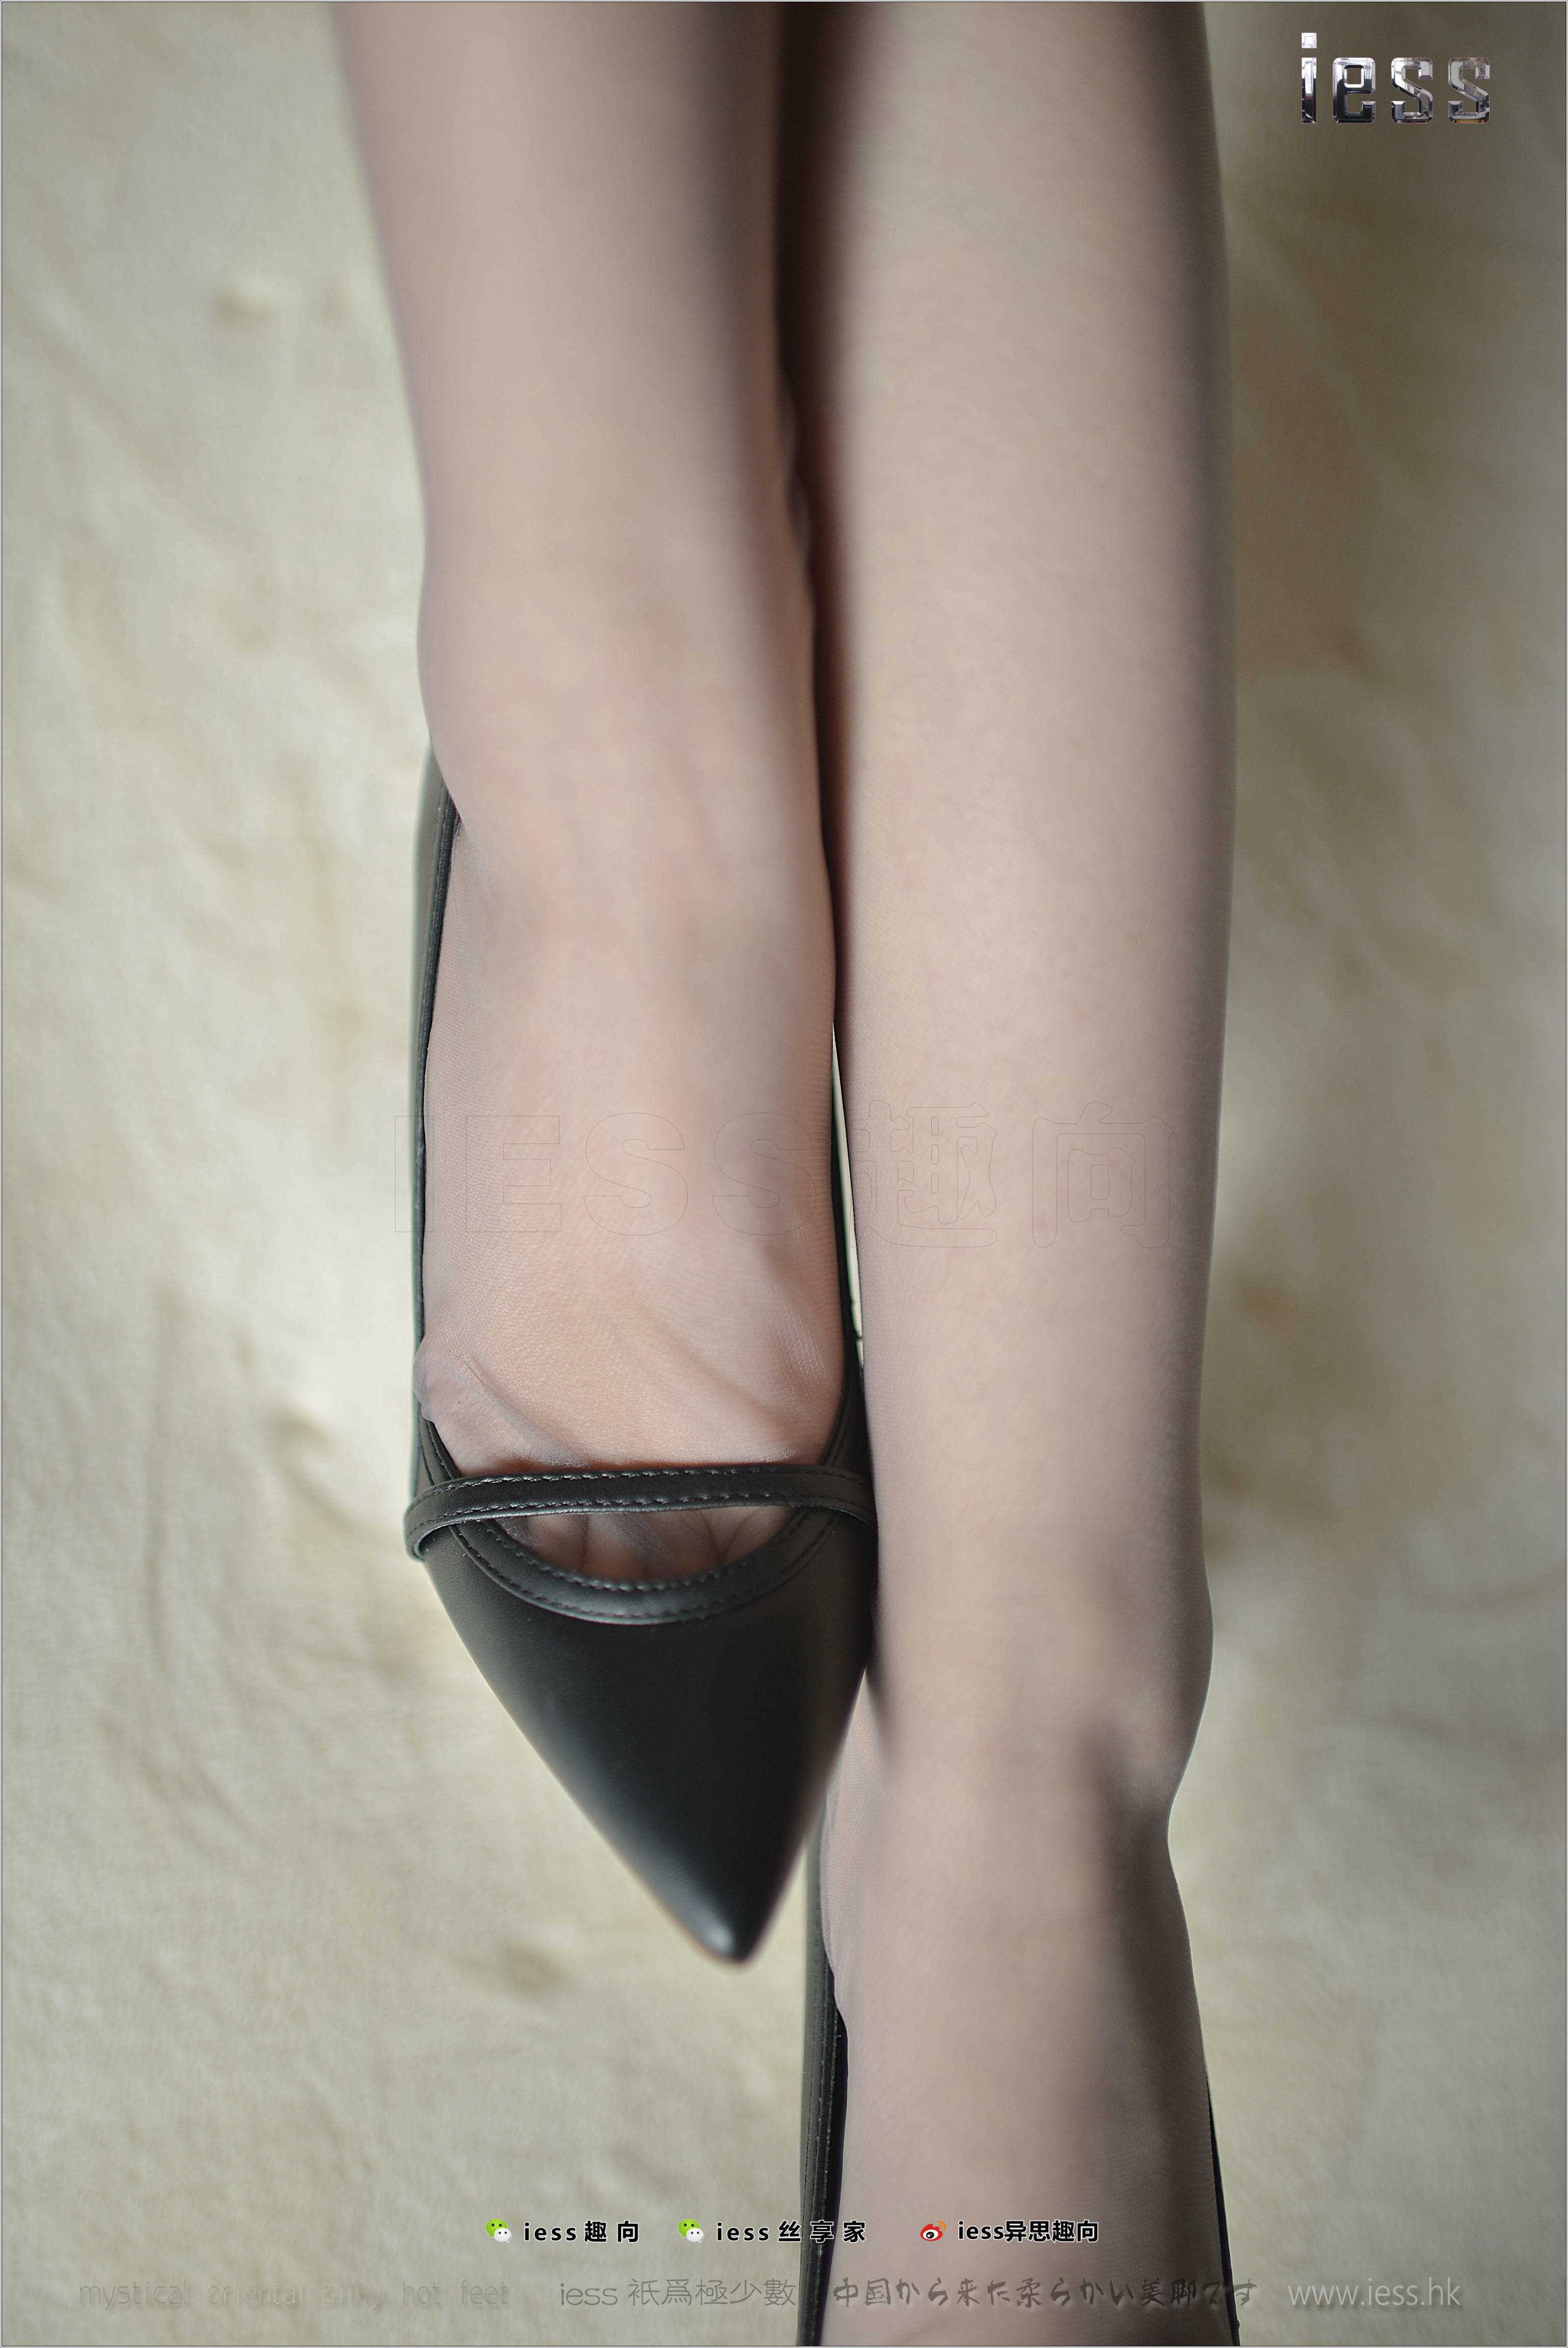 China Beauty Legs and feet 477